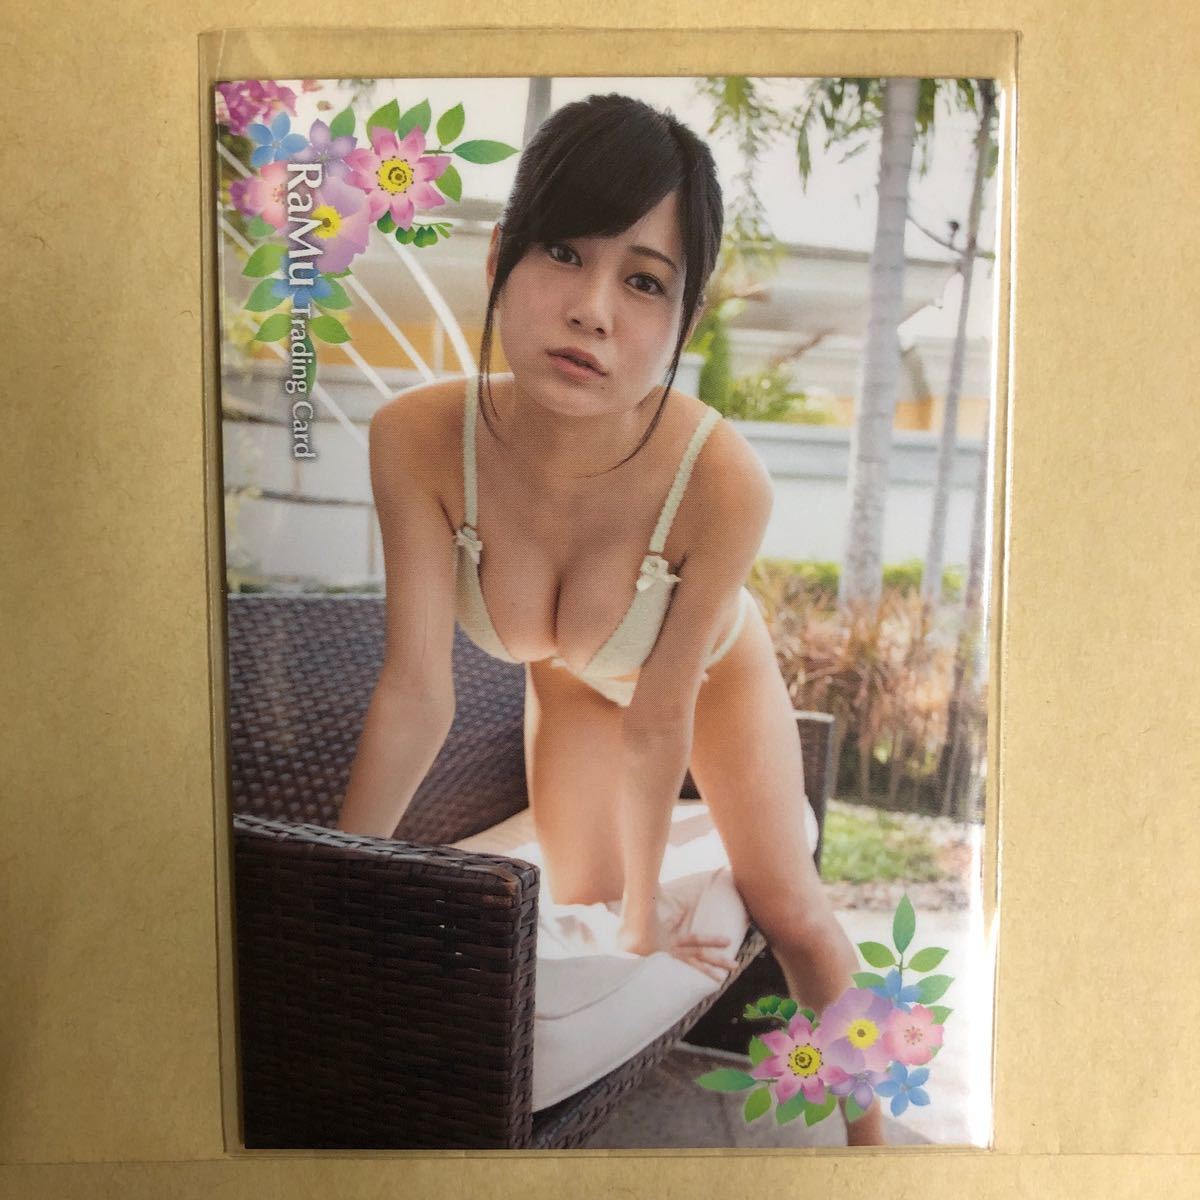 RaMu 2019 trading card idol gravure card swimsuit bikini underwear 052 star First trading card 